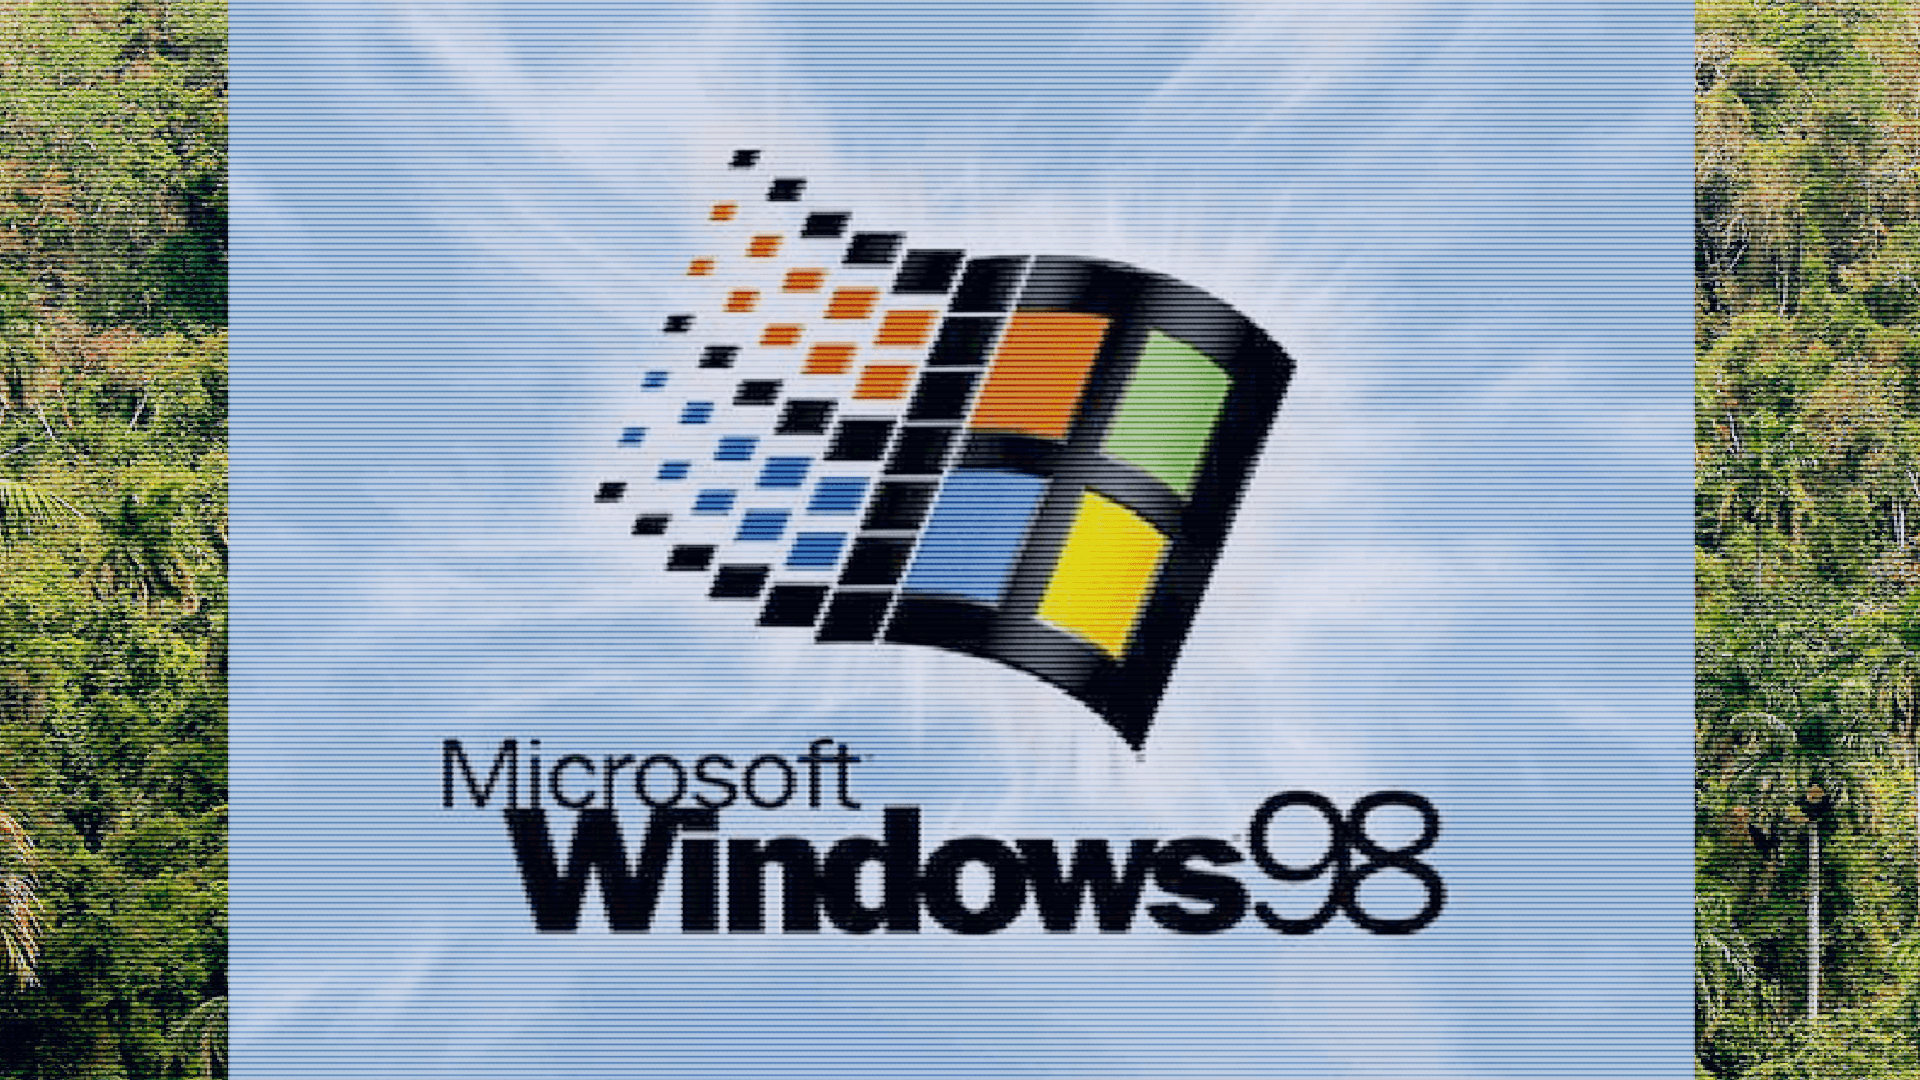 Windows 98 Wallpaper (1920 x 1080)